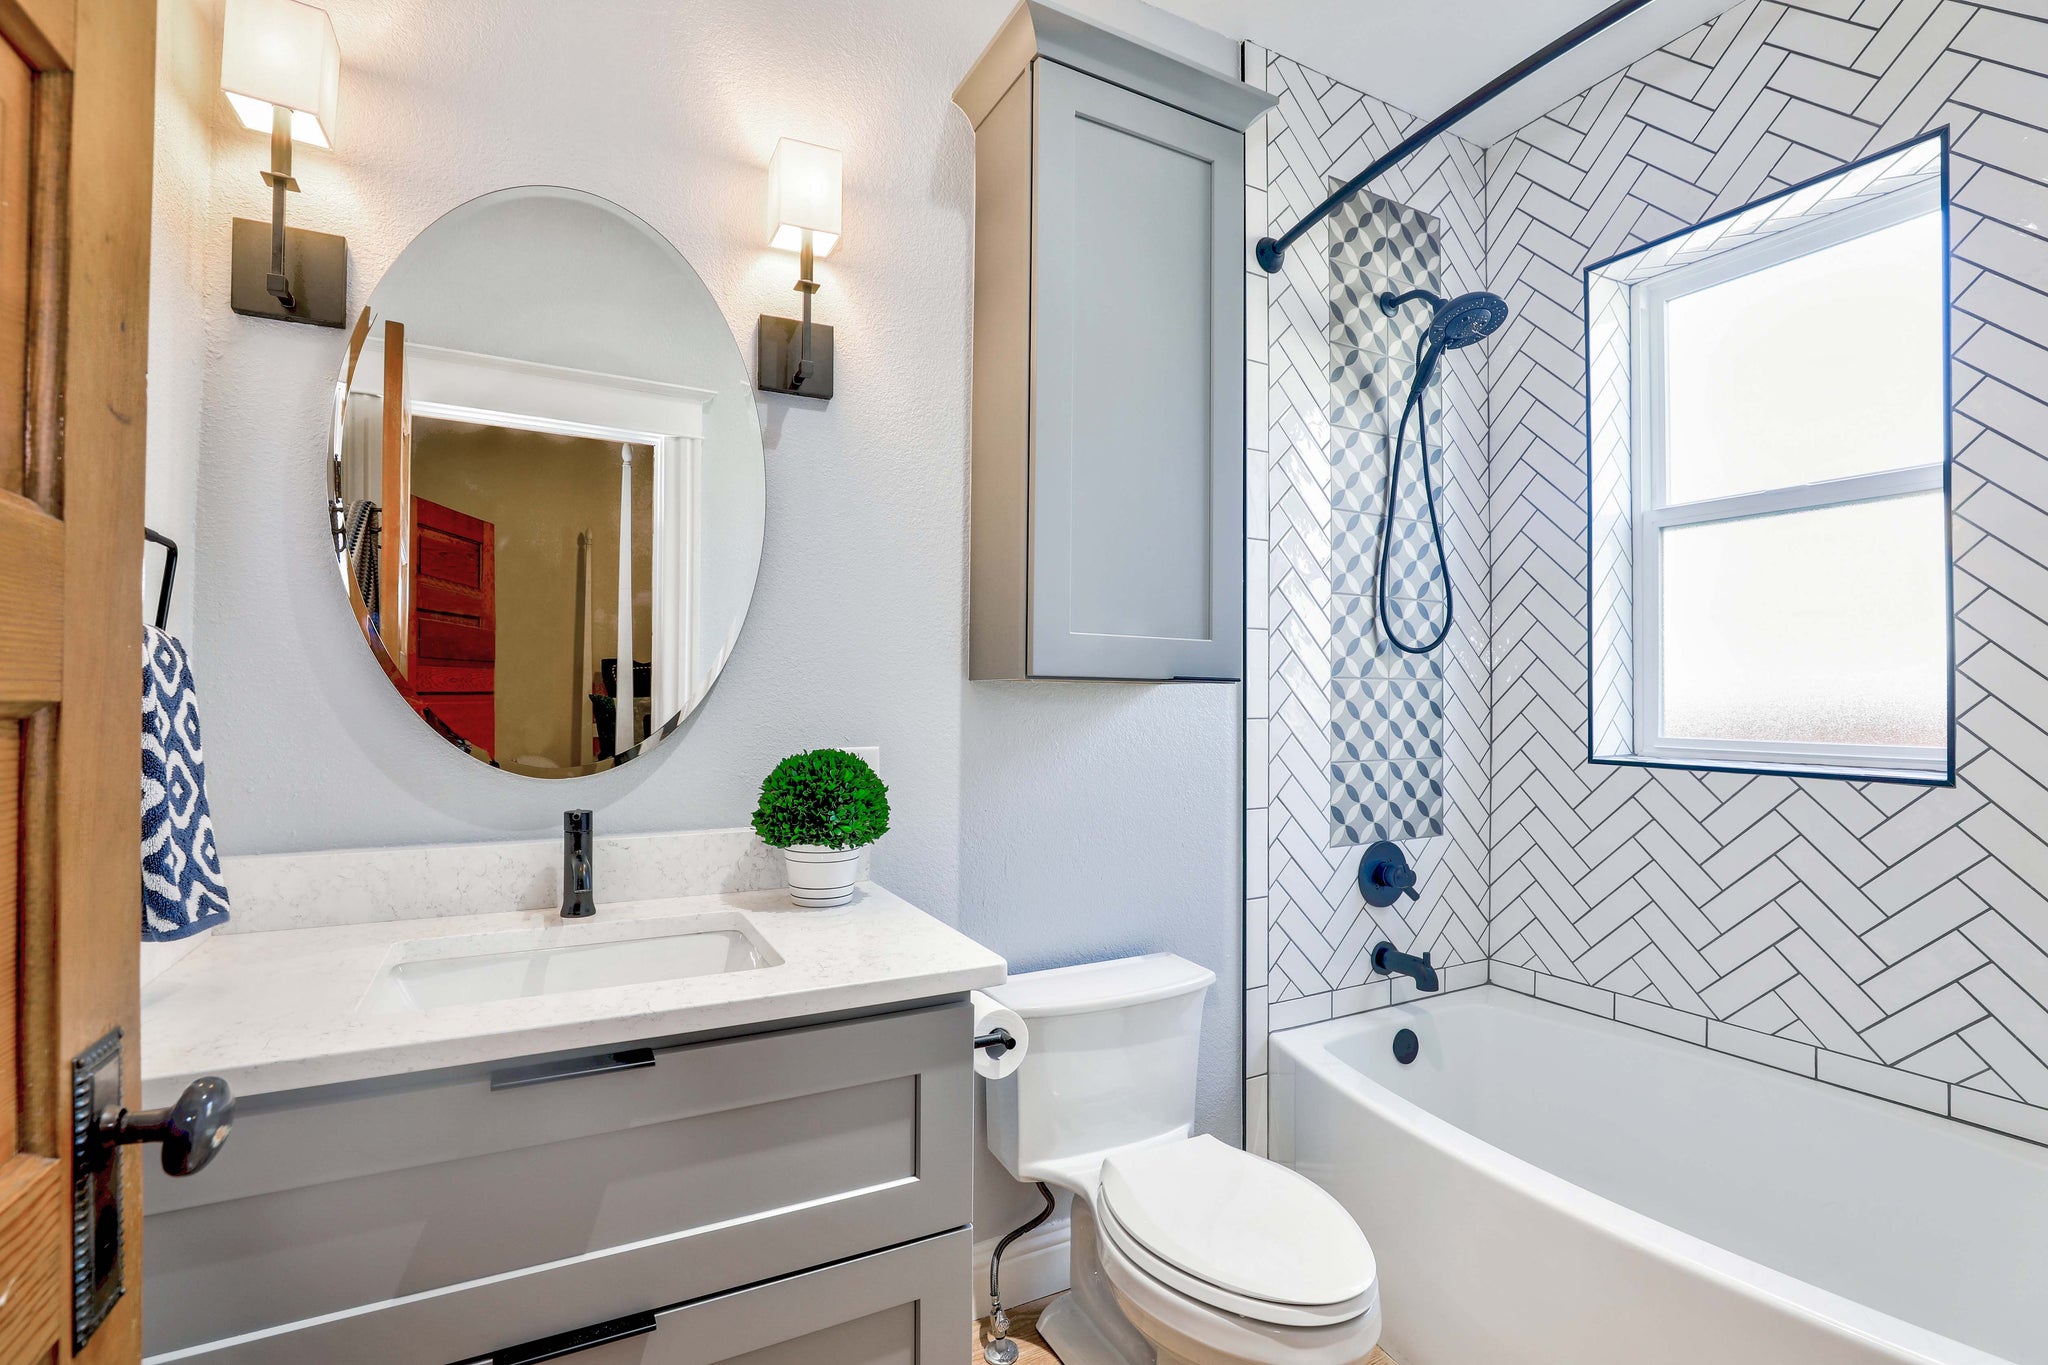 Transitional bathroom with shaker style vanity, round mirrors, and white backsplash tub